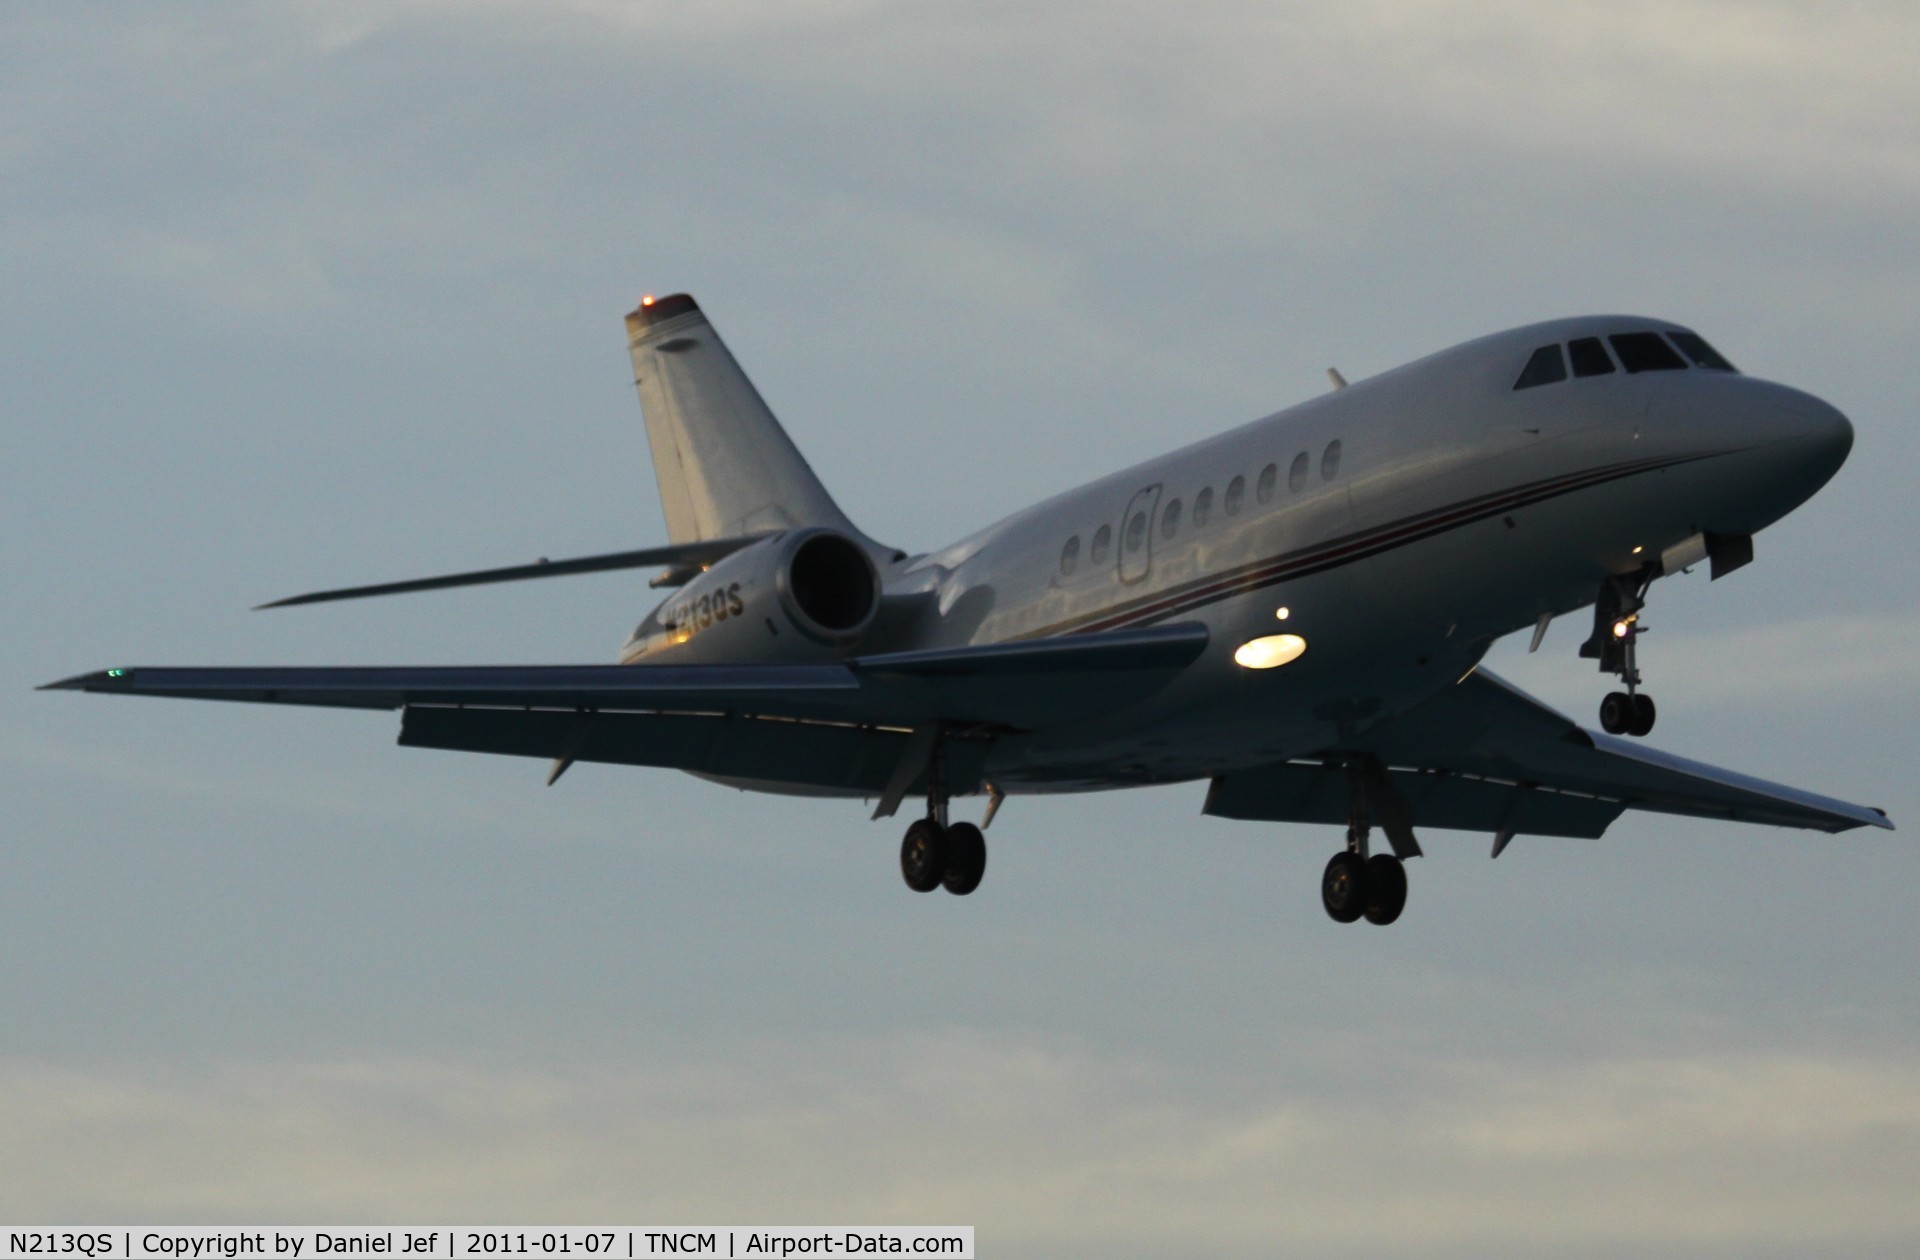 N213QS, 2000 Dassault Falcon 2000 C/N 113, N213QS landing at TNCM